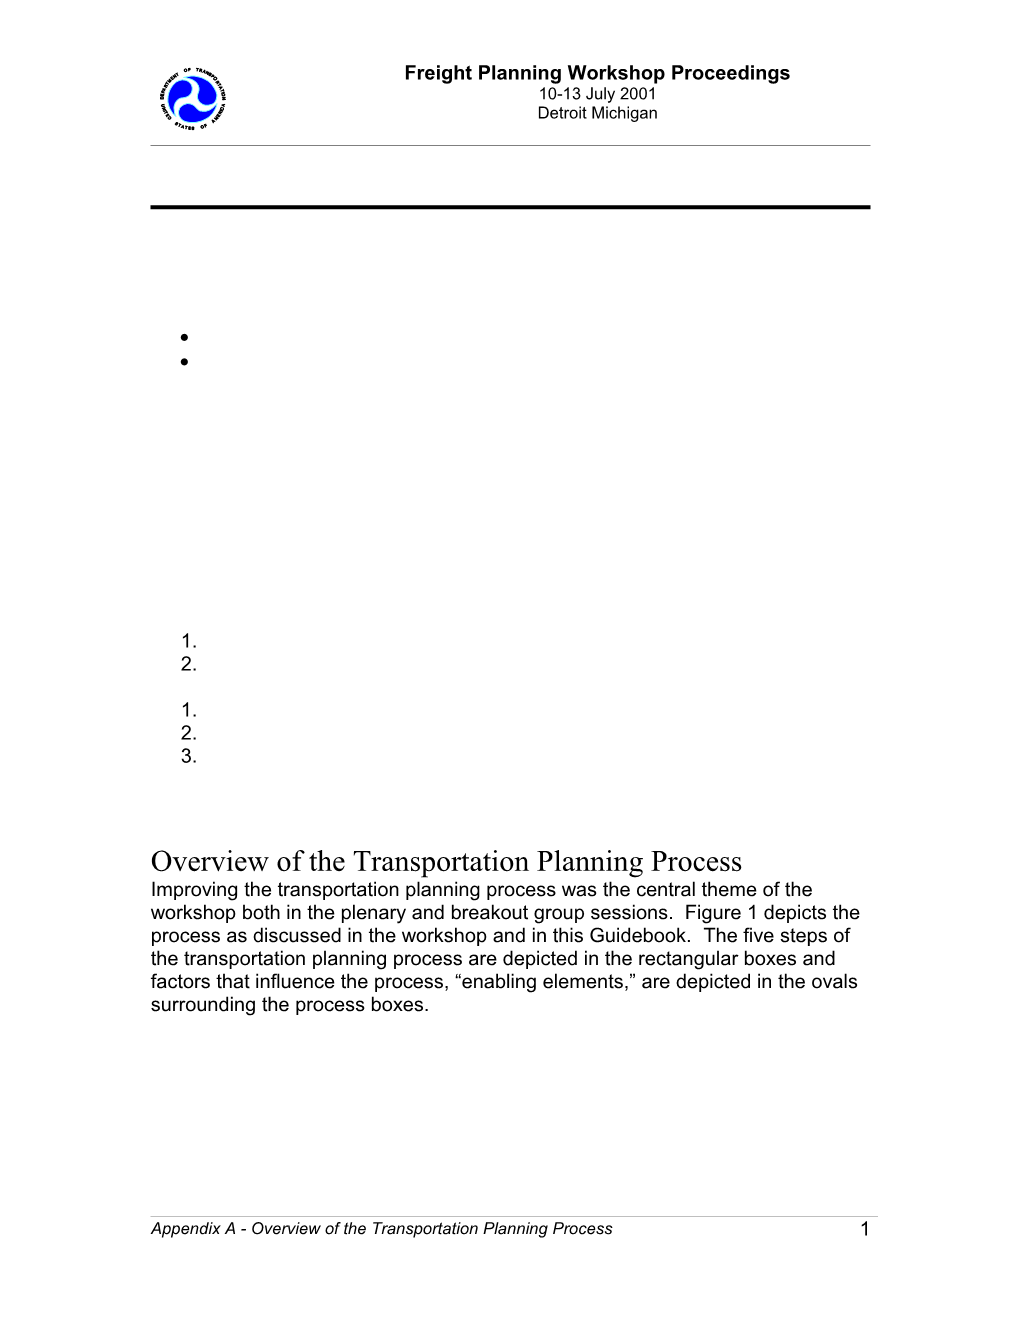 Freight Planning Workshop Report